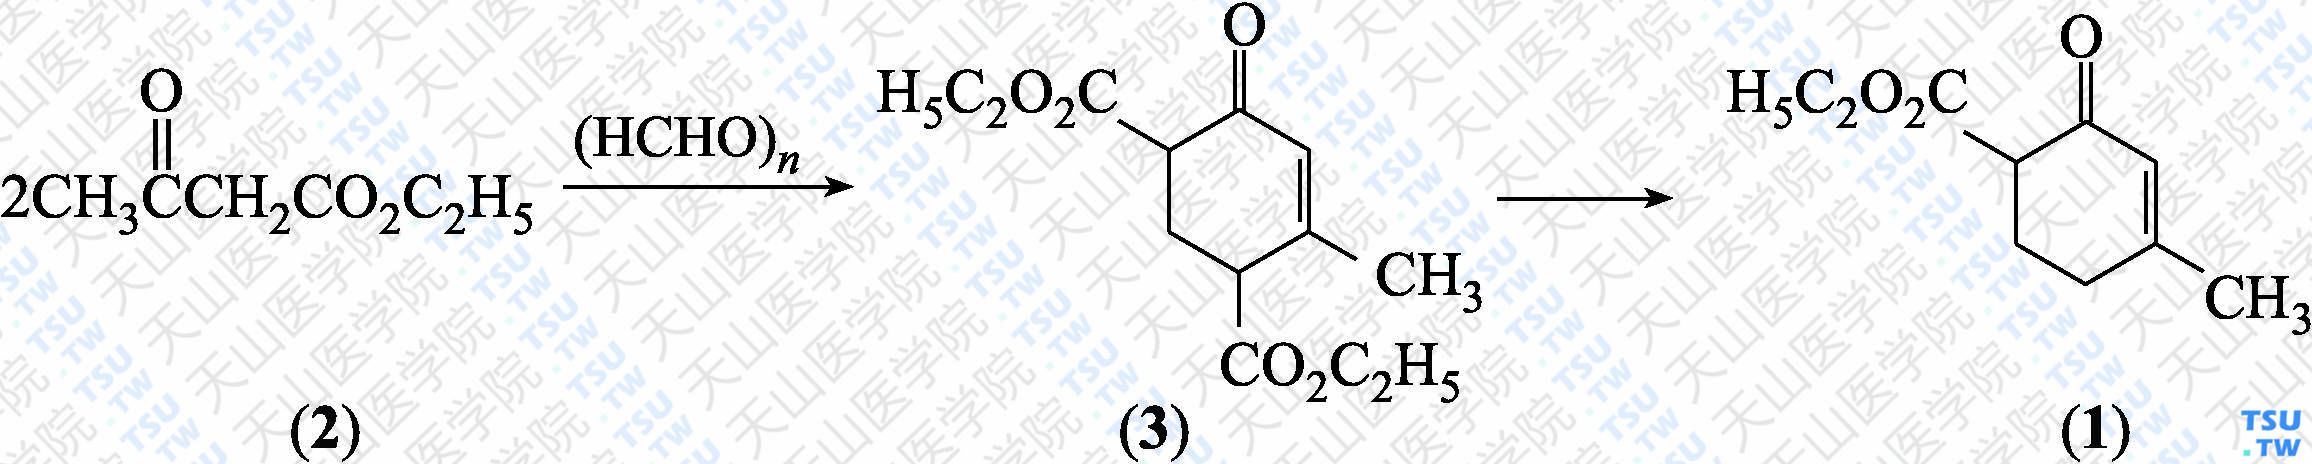 3-甲基-4-乙氧羰基-2-环己烯酮（分子式：C<sub>10</sub>H<sub>14</sub>O<sub>3</sub>）的合成方法路线及其结构式